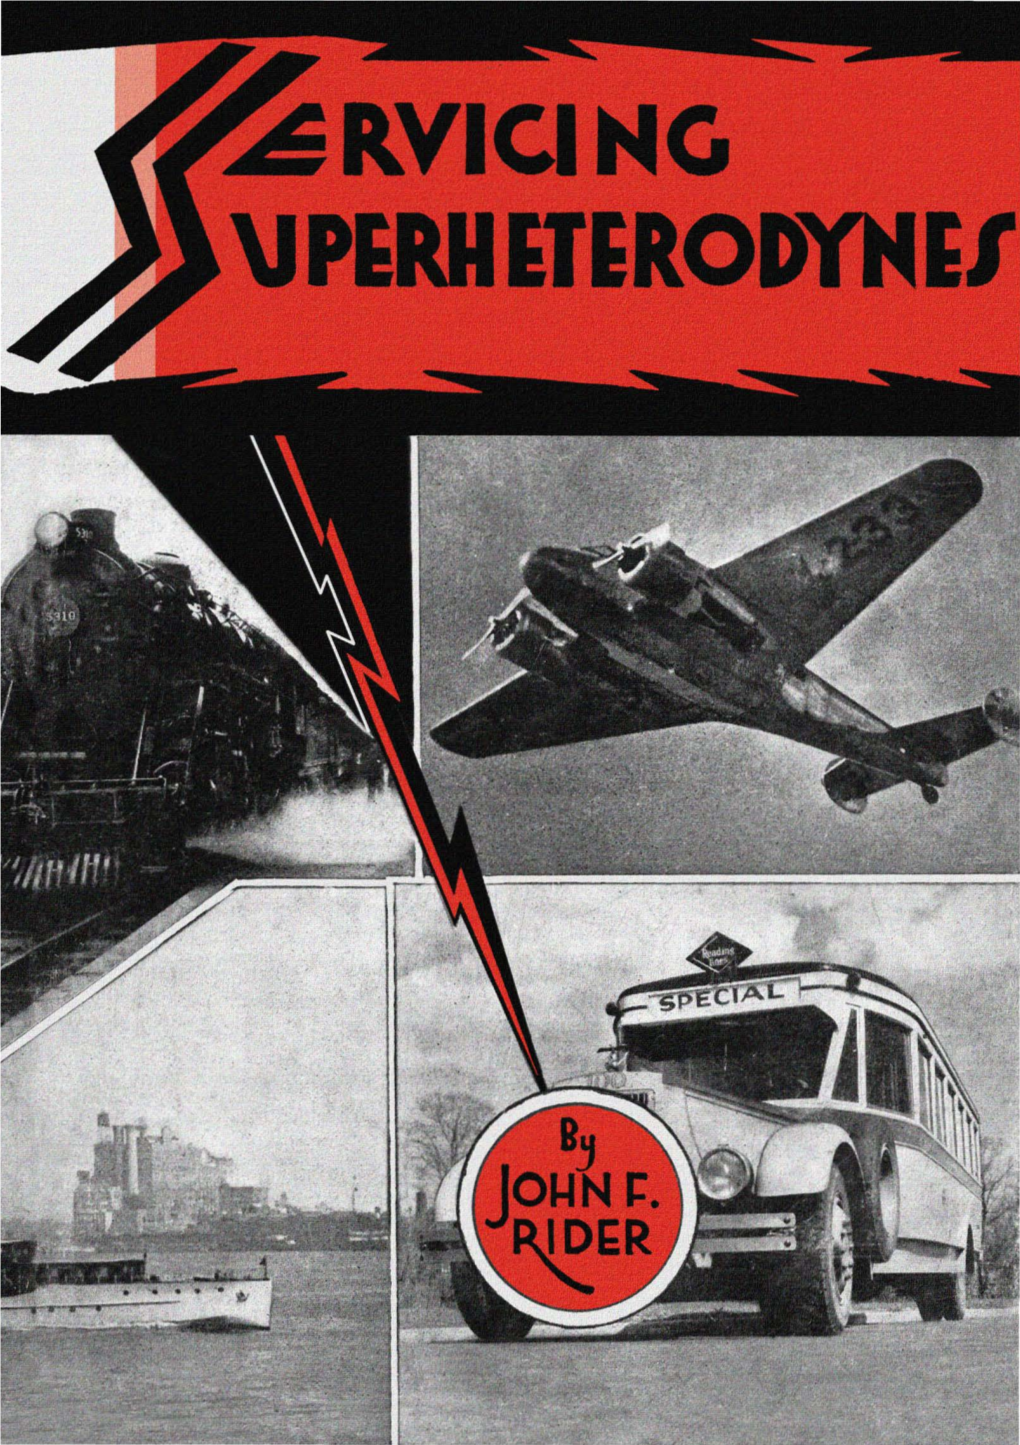 Servicing Superheterodynes (Revised Edition)